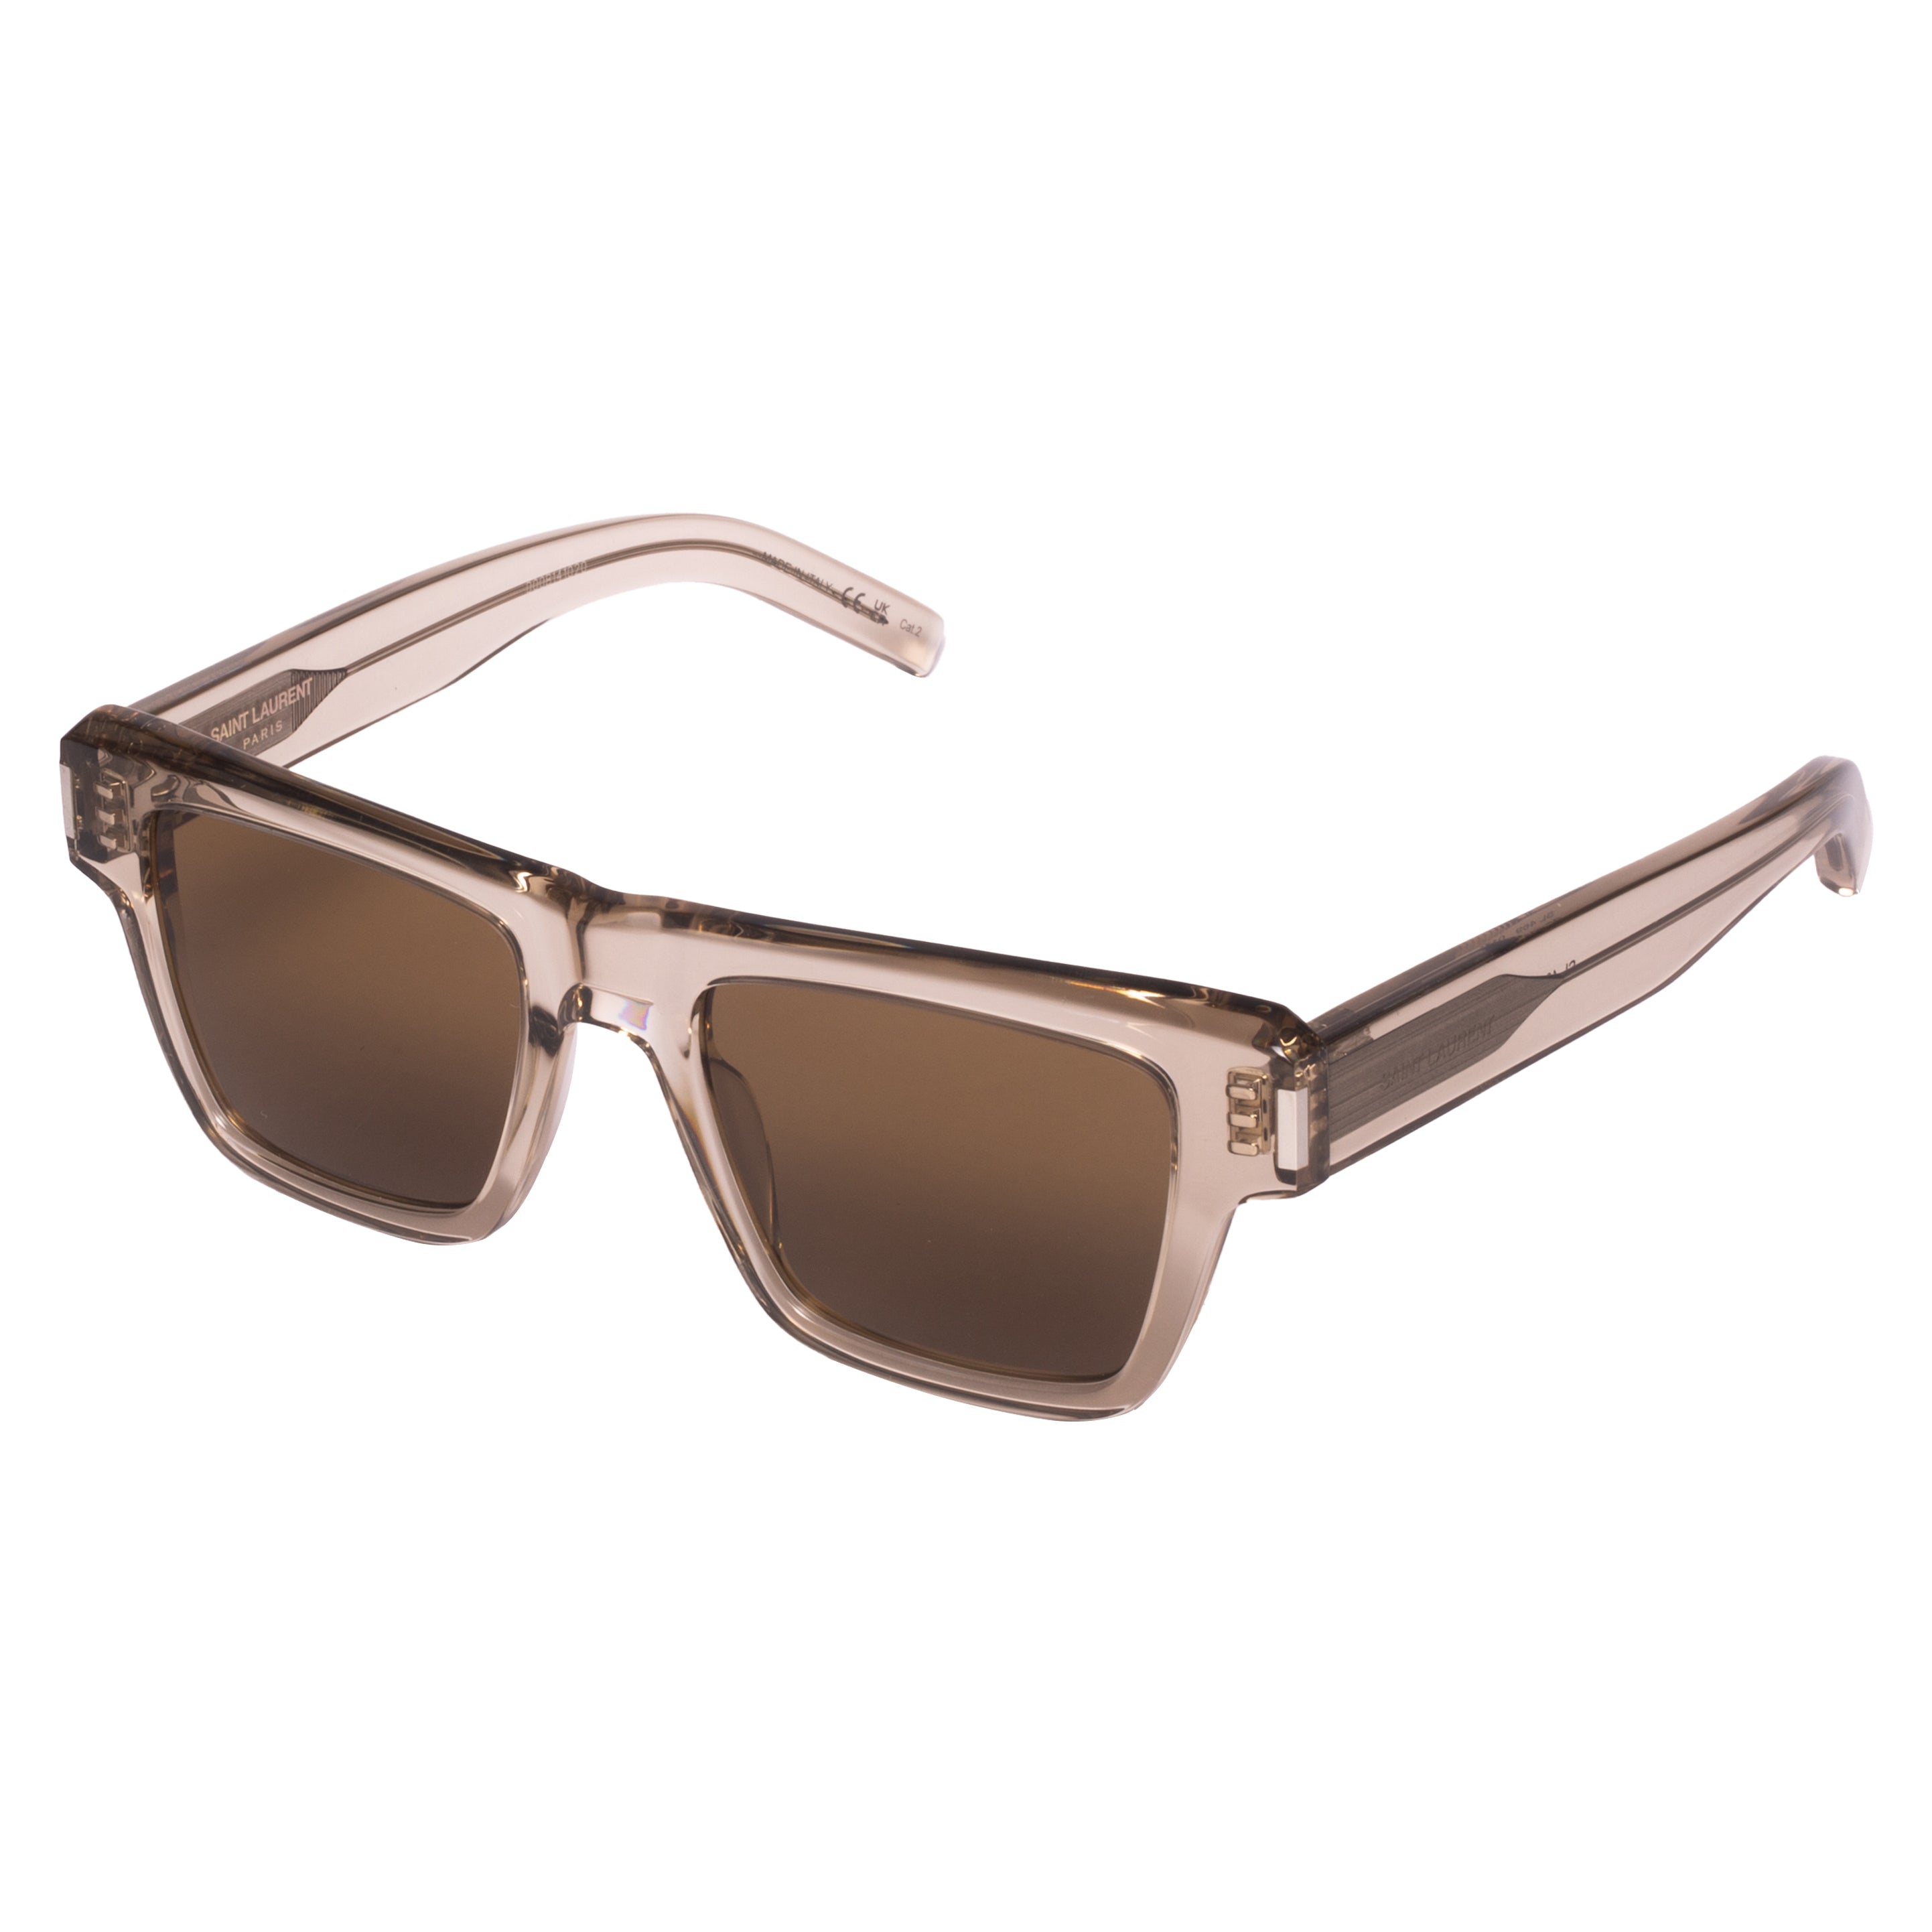 Saint Laurent-SL 469-51-017 Sunglasses - Premium Sunglasses from Saint Laurent - Just Rs. 26400! Shop now at Laxmi Opticians